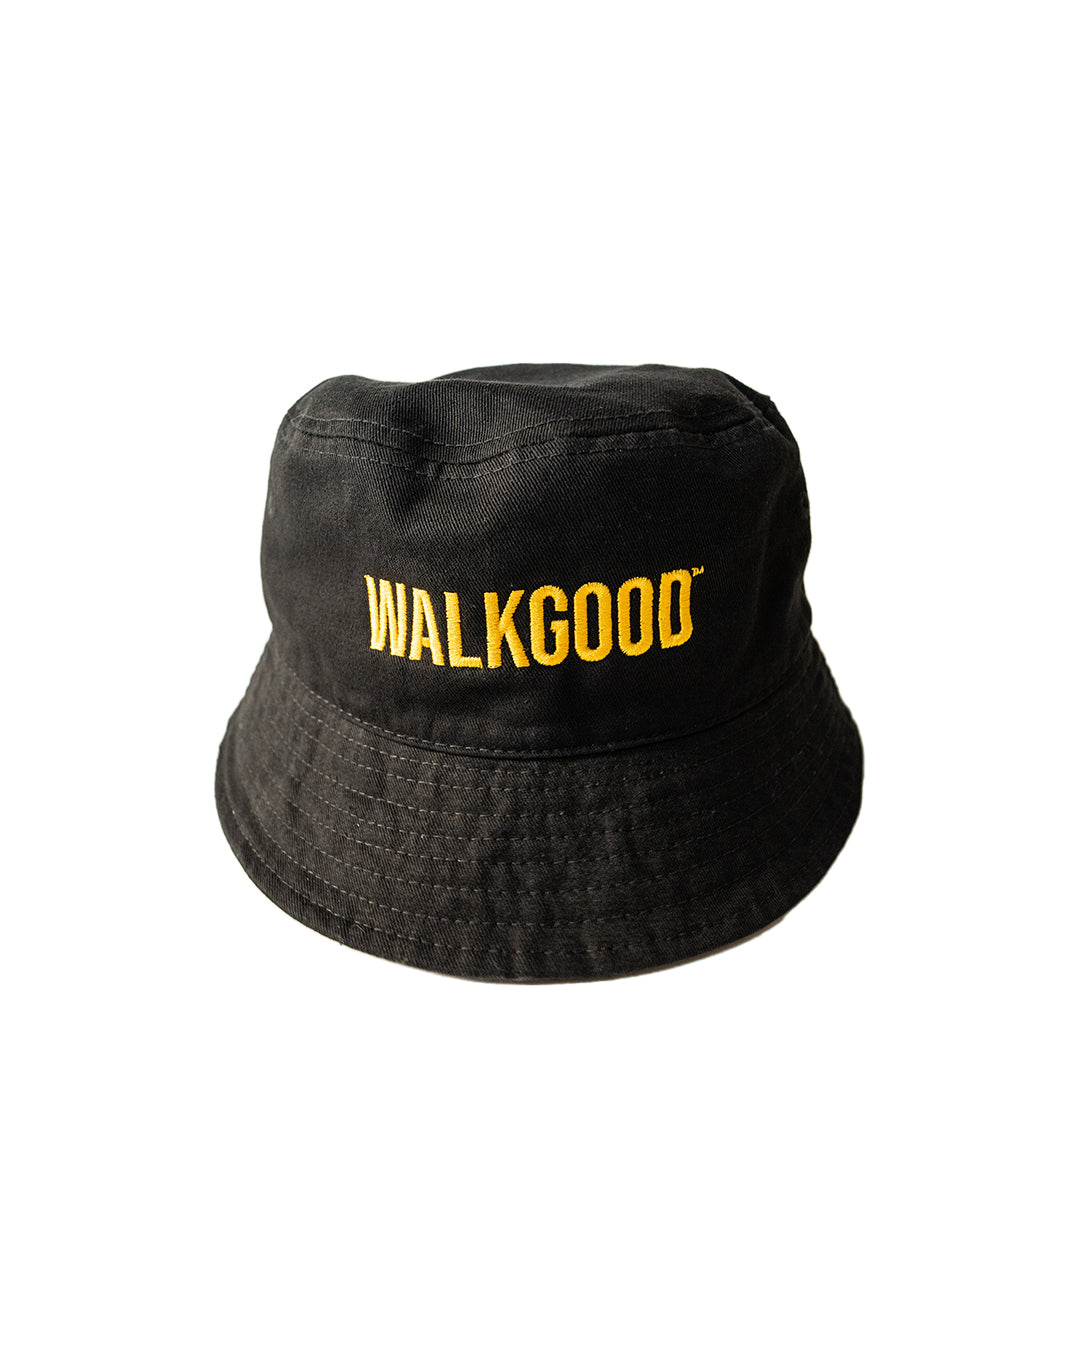 WALKGOOD MEDALLION BUCKET HAT